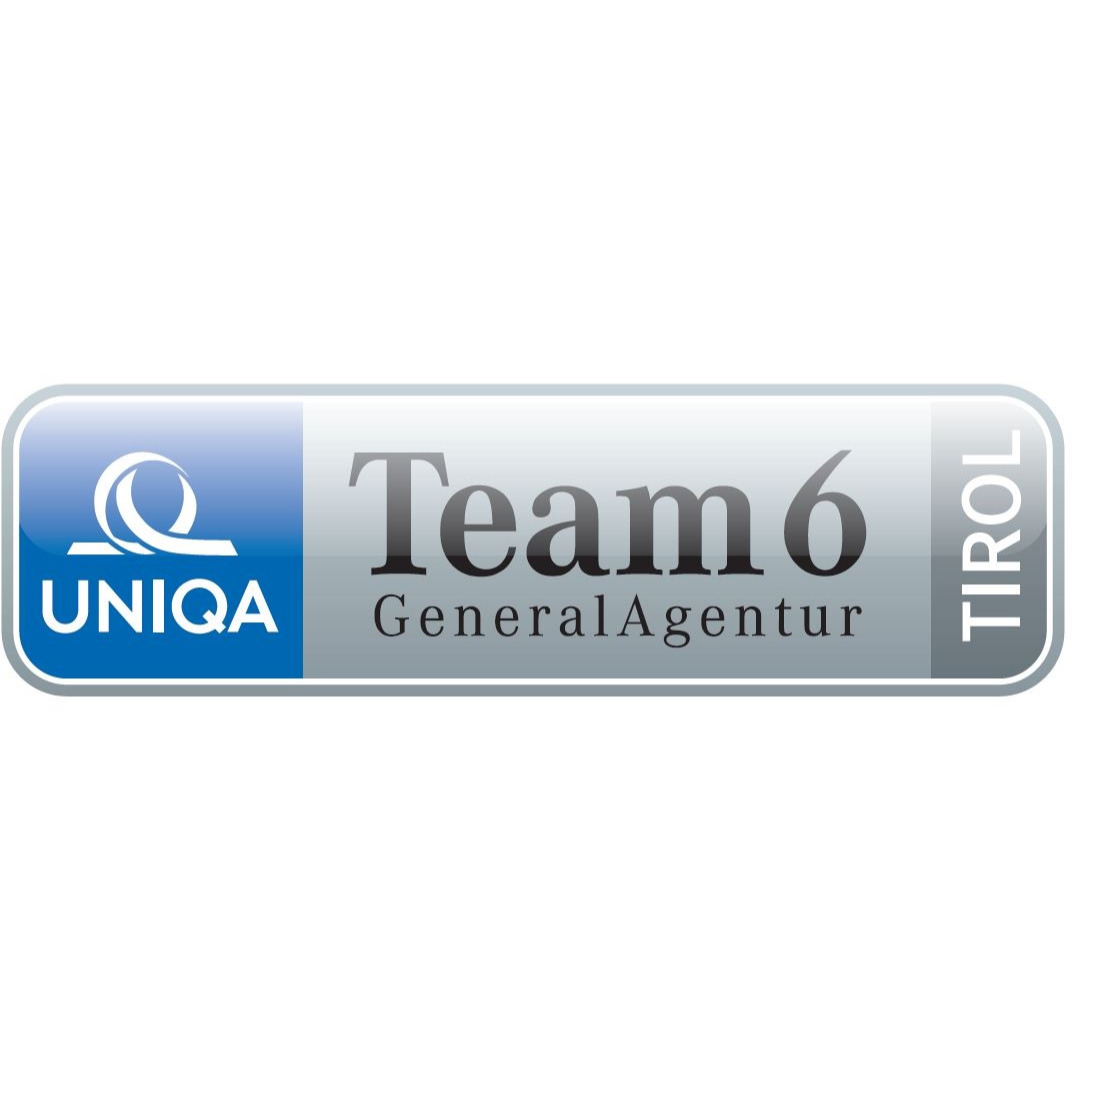 Uniqa GeneralAgentur Team 6 - Fagschlunger Spielmann Engl OG, KFZ- Zulassungsstelle Logo